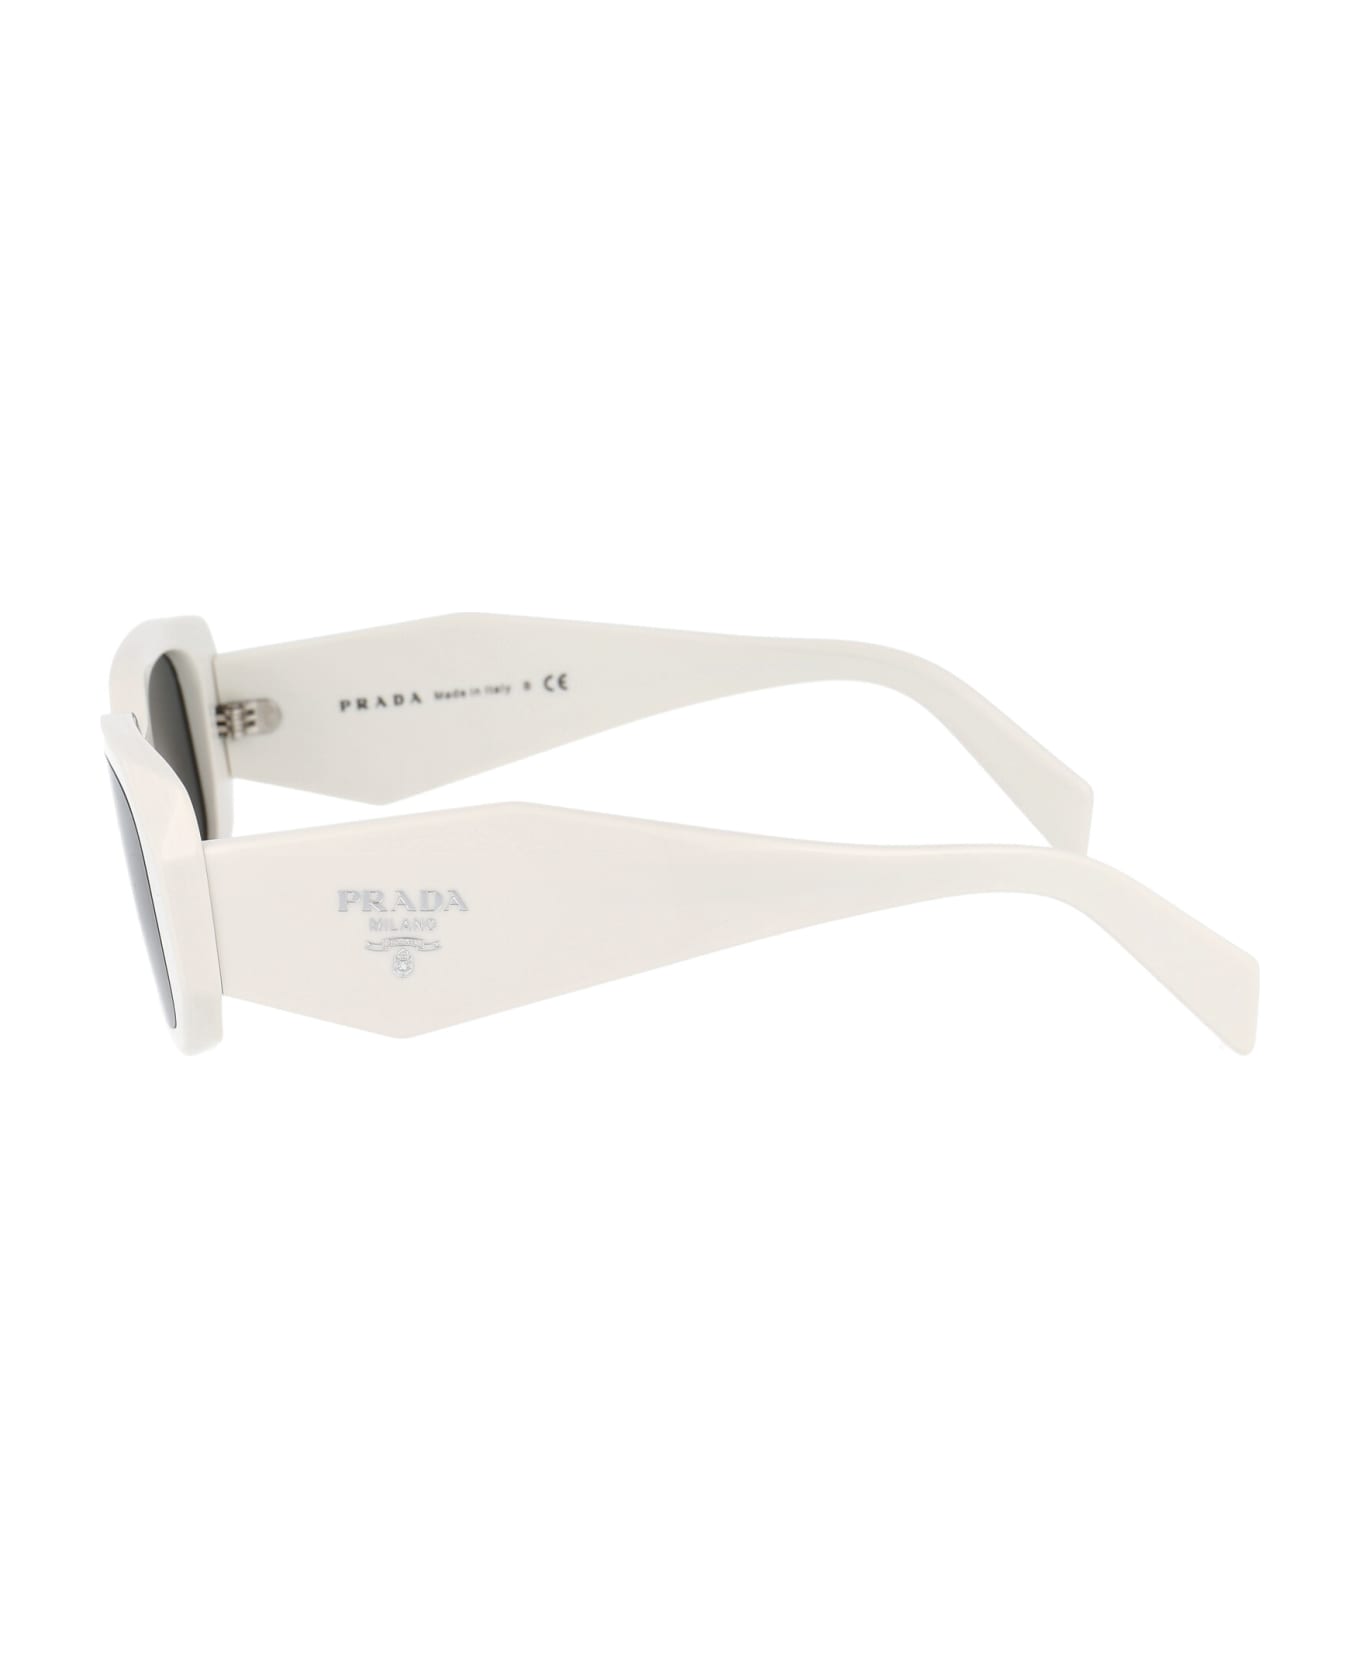 Prada Eyewear 0pr 17ws Sunglasses - 1425S0 TALC